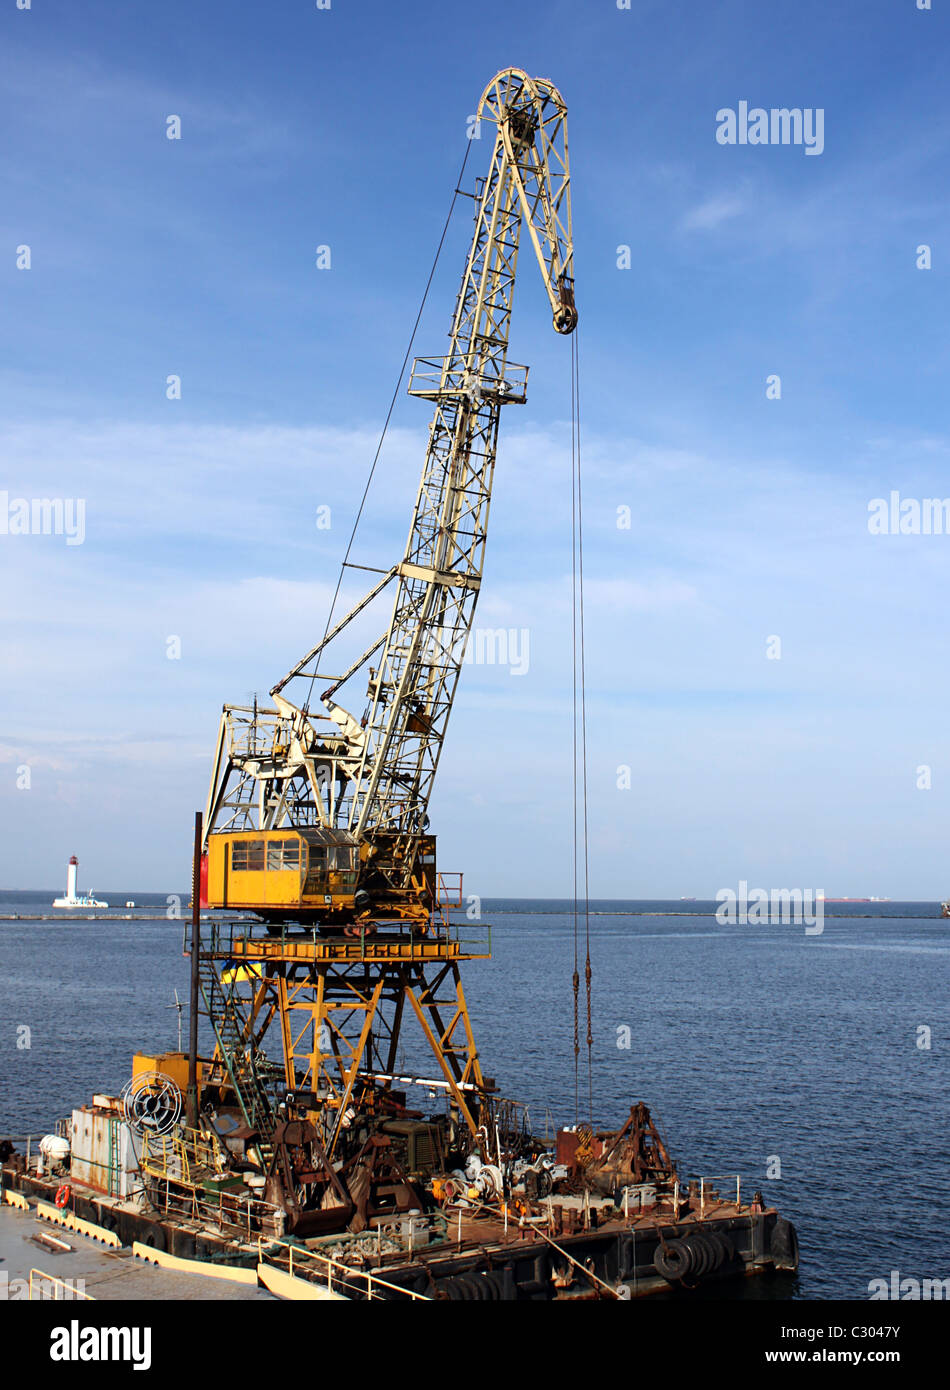 seaport crane on a berth Stock Photo